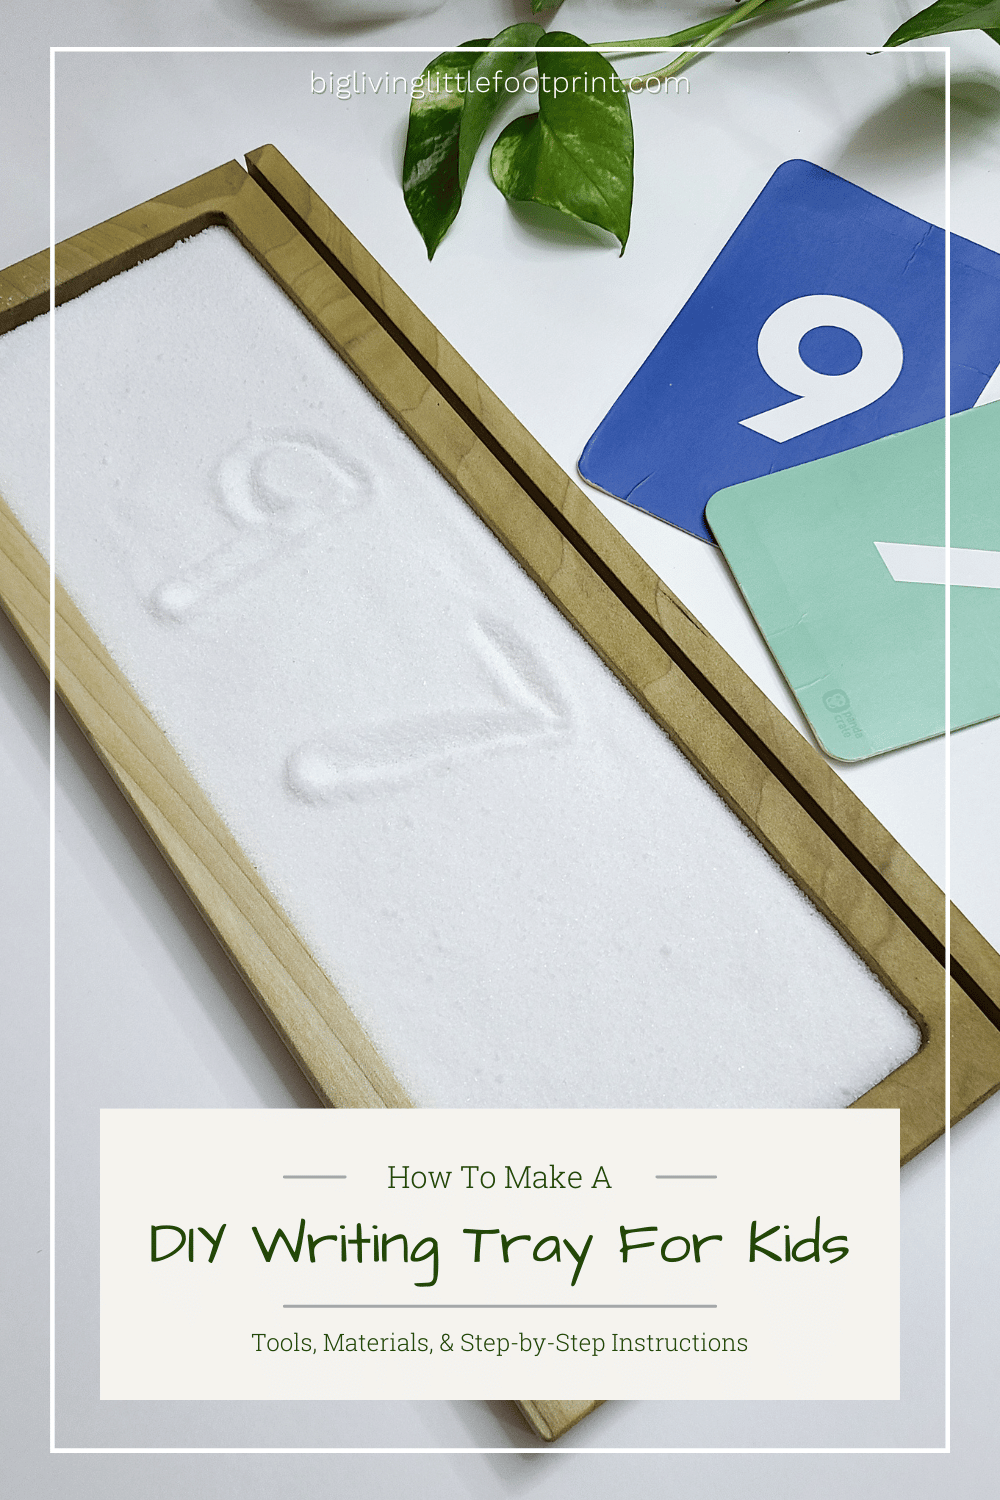 Making Montessori Ours: DIY Montessori Work Trays & Boxes, Montessori  Materials At Home